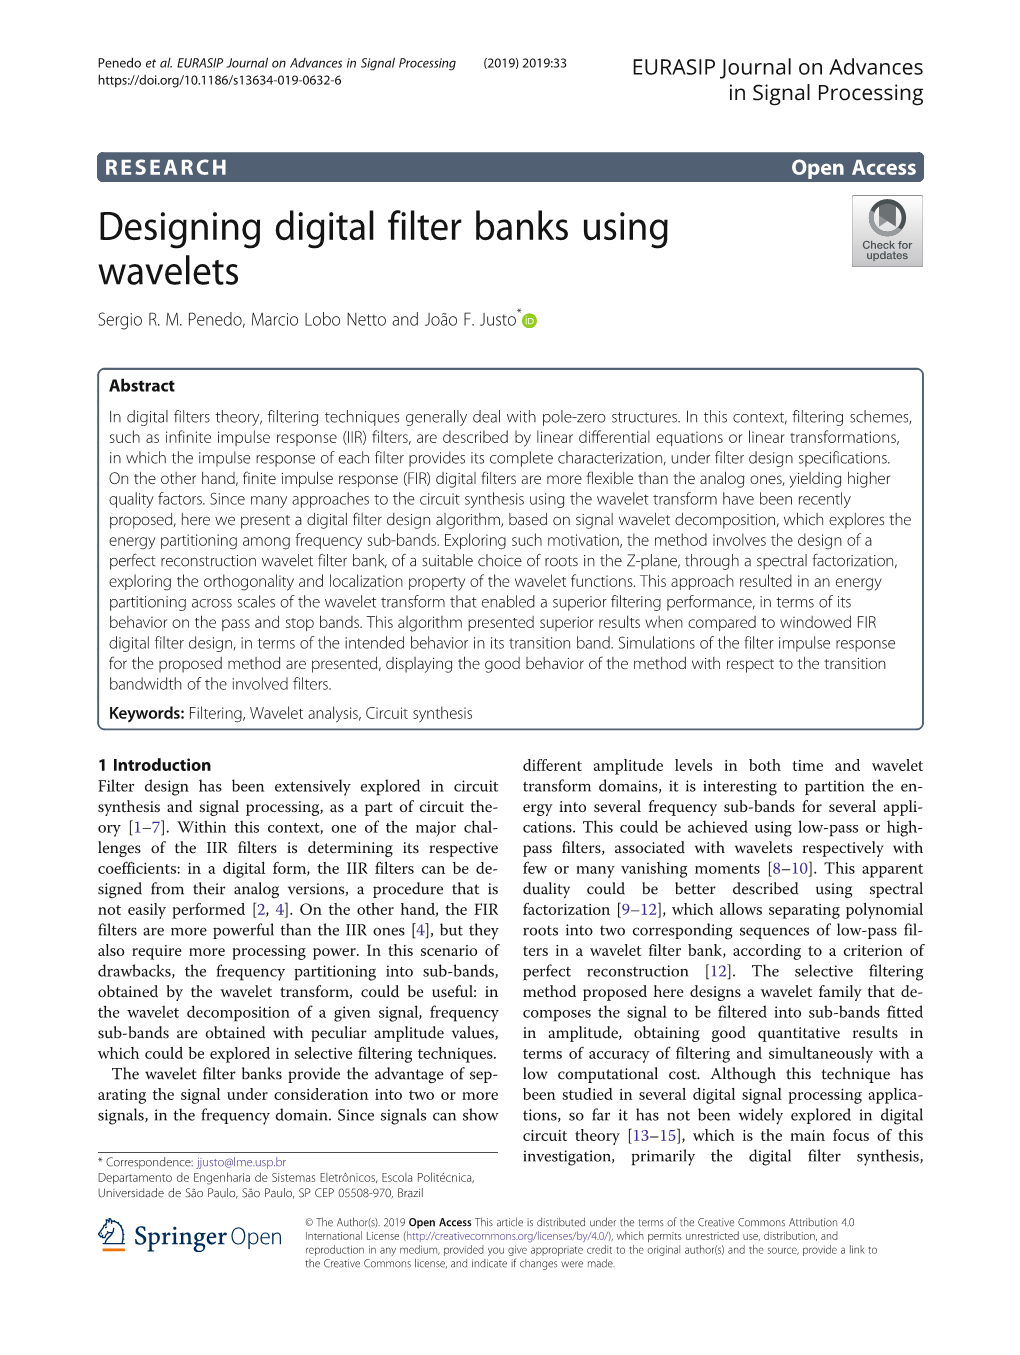 Designing Digital Filter Banks Using Wavelets Sergio R